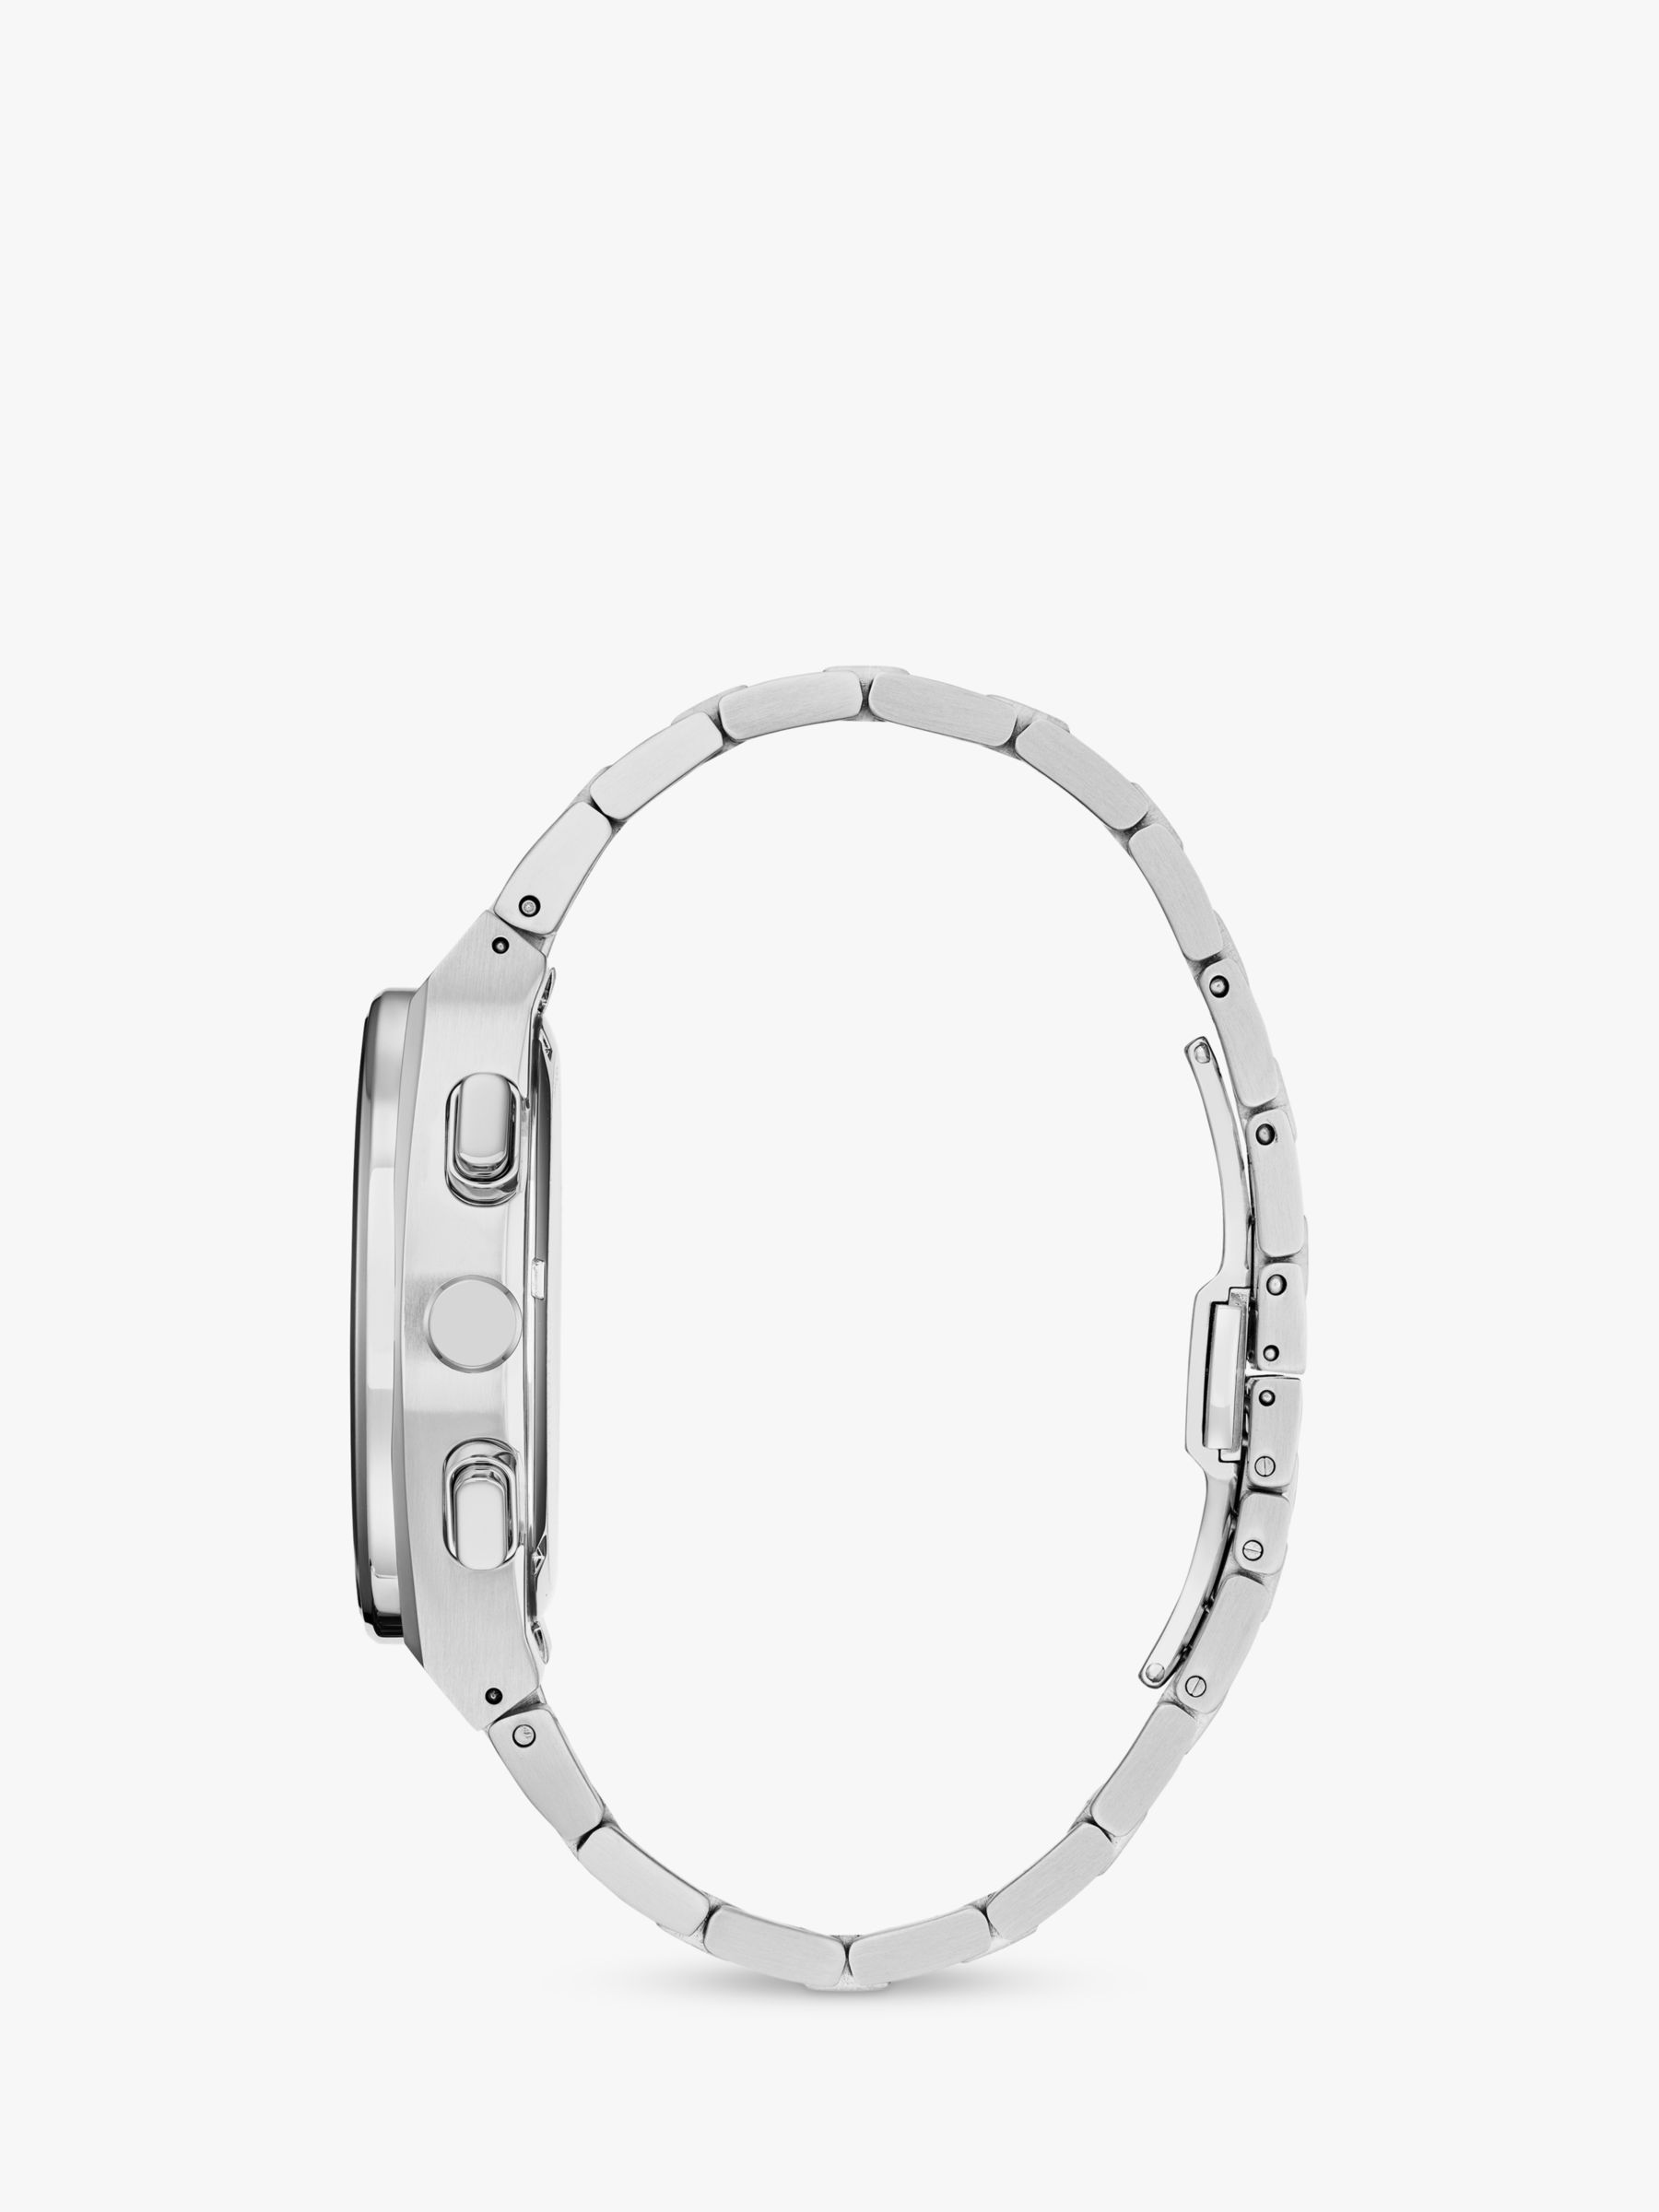 Buy Citizen Men's Modern Eco-Drive Bracelet Strap Watch Online at johnlewis.com